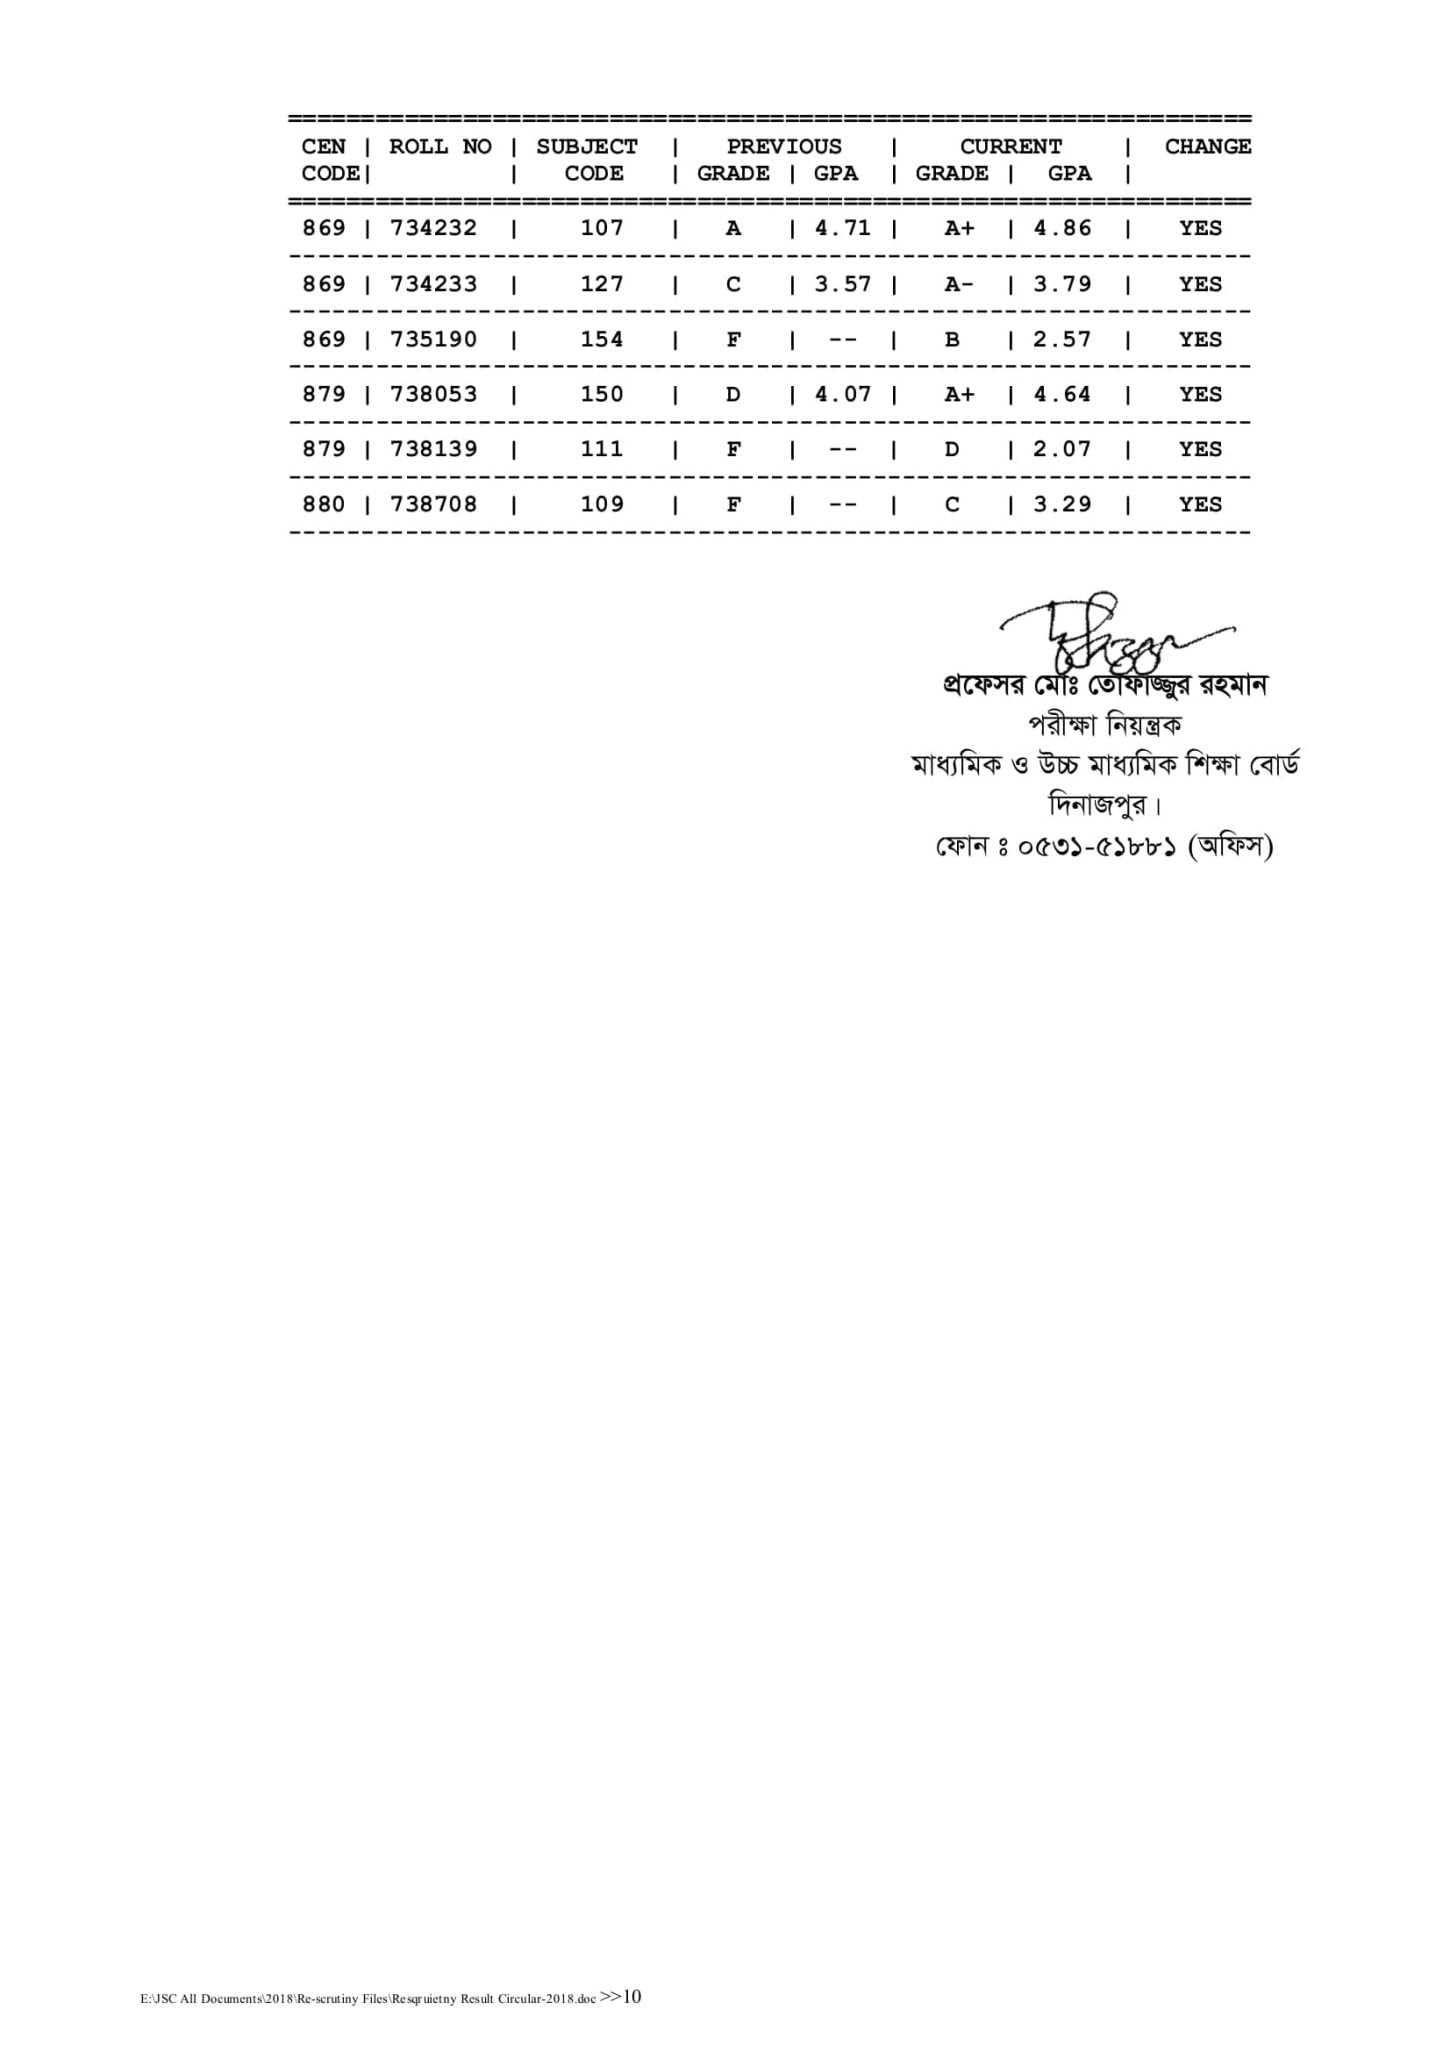 Dinajpur Board JSC Board Challenge Re scrutiny Result 2018 10